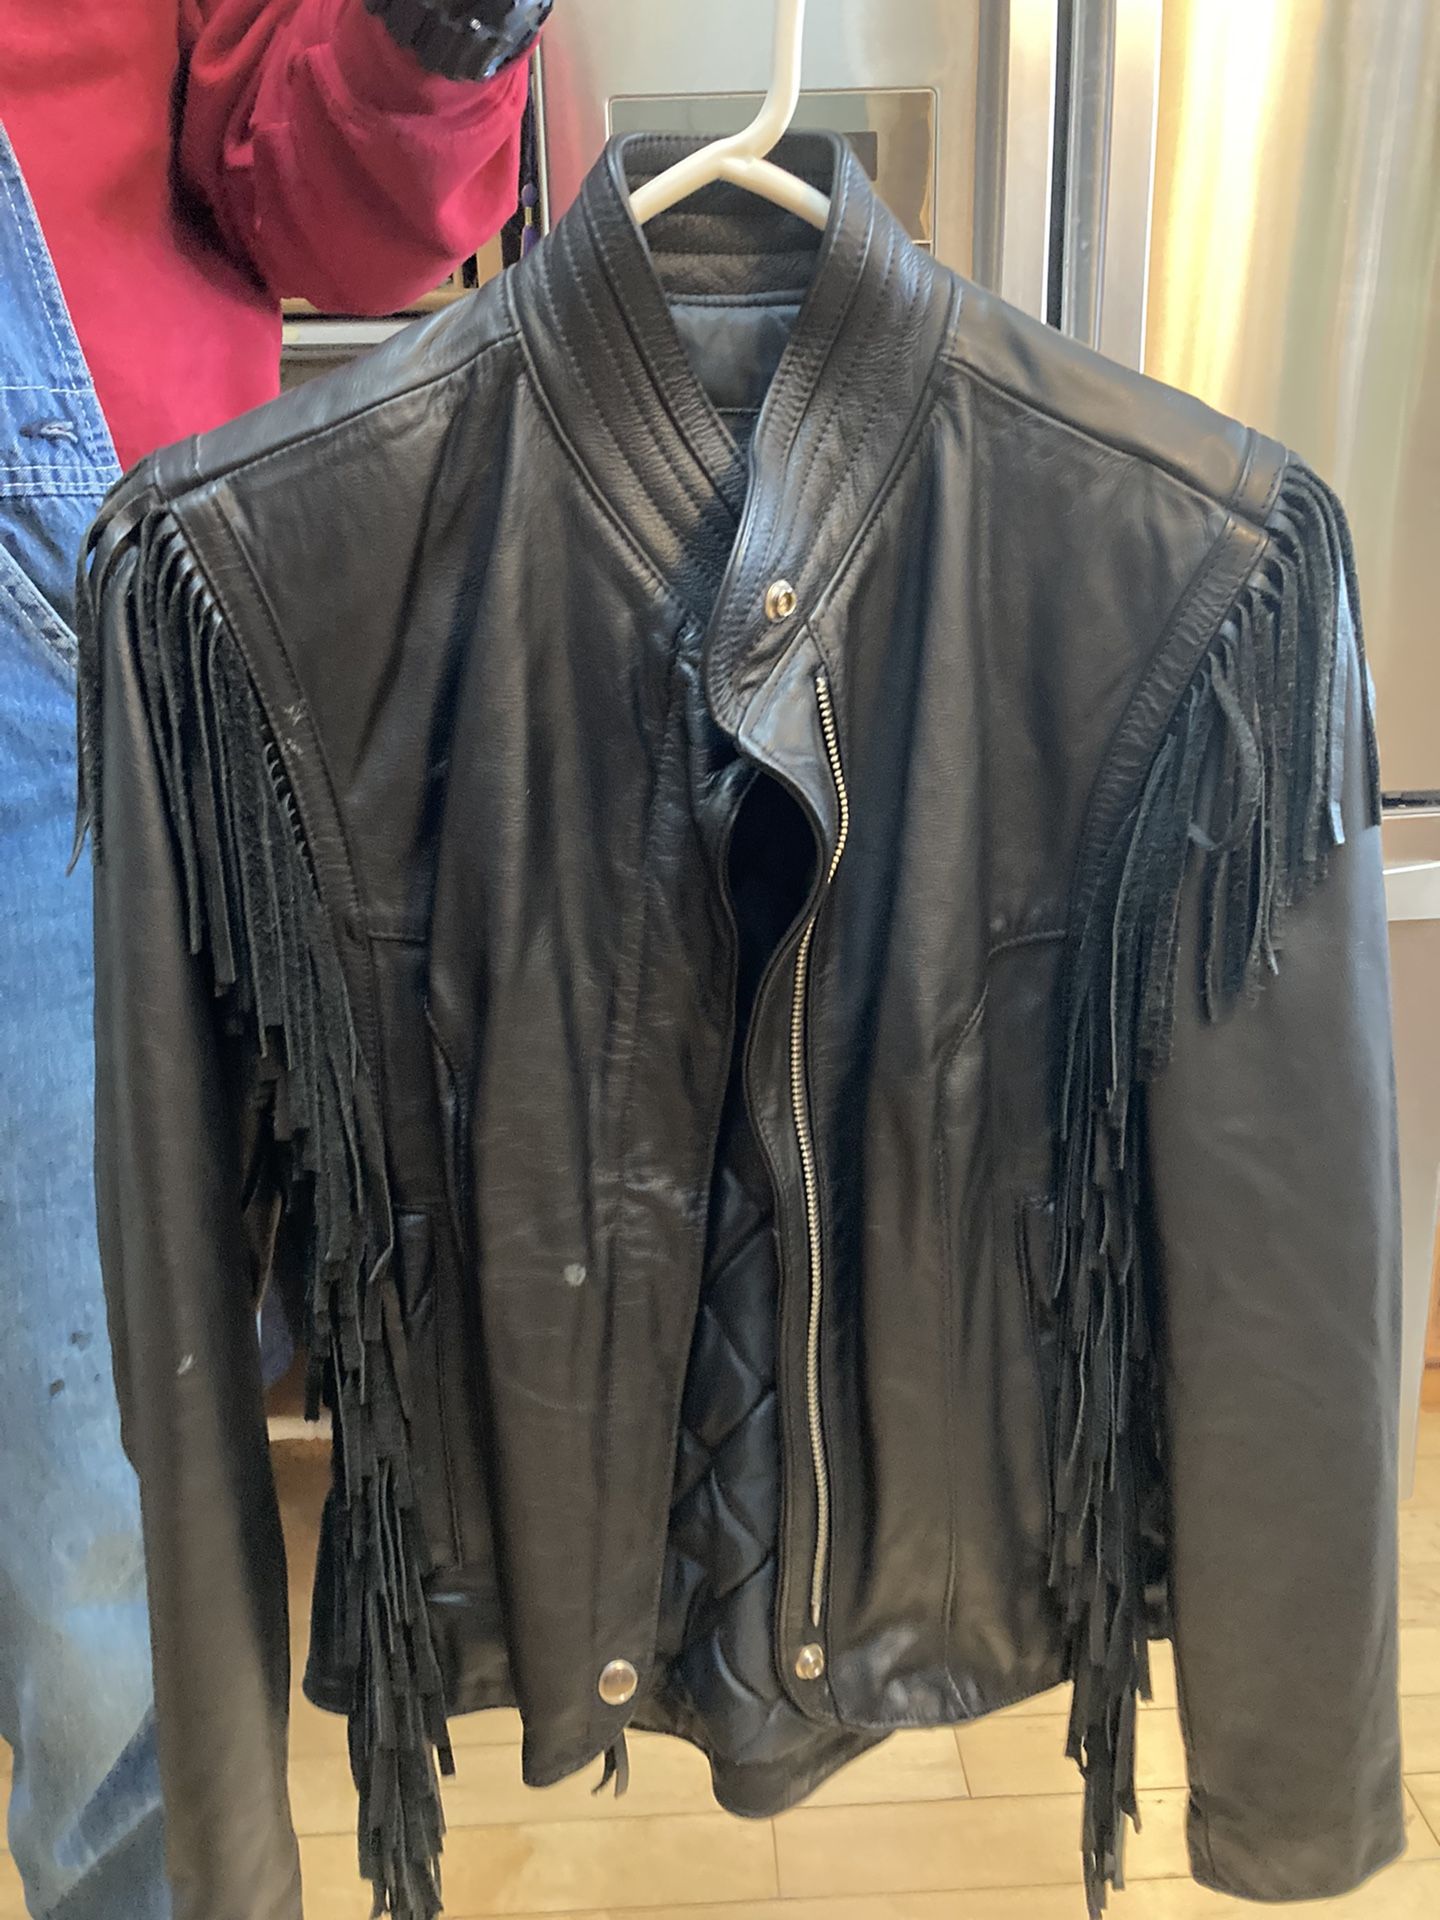 Harley Davidson Woman’s Leather Jacket